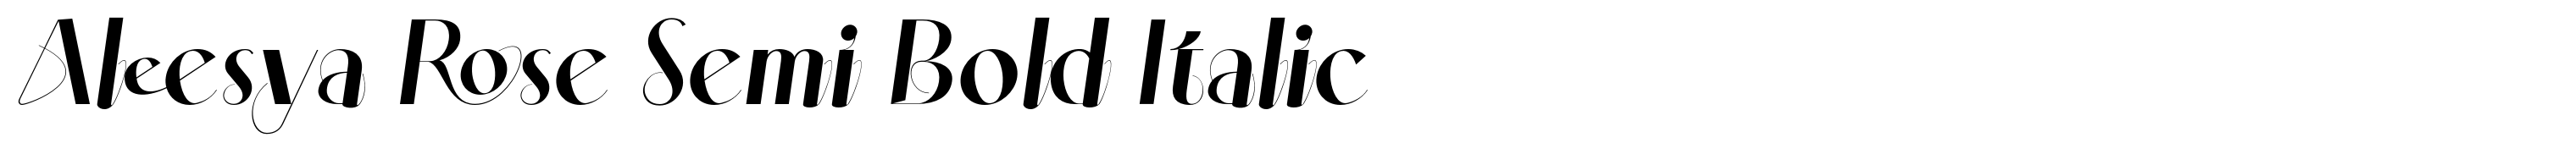 Aleesya Rose Semi Bold Italic